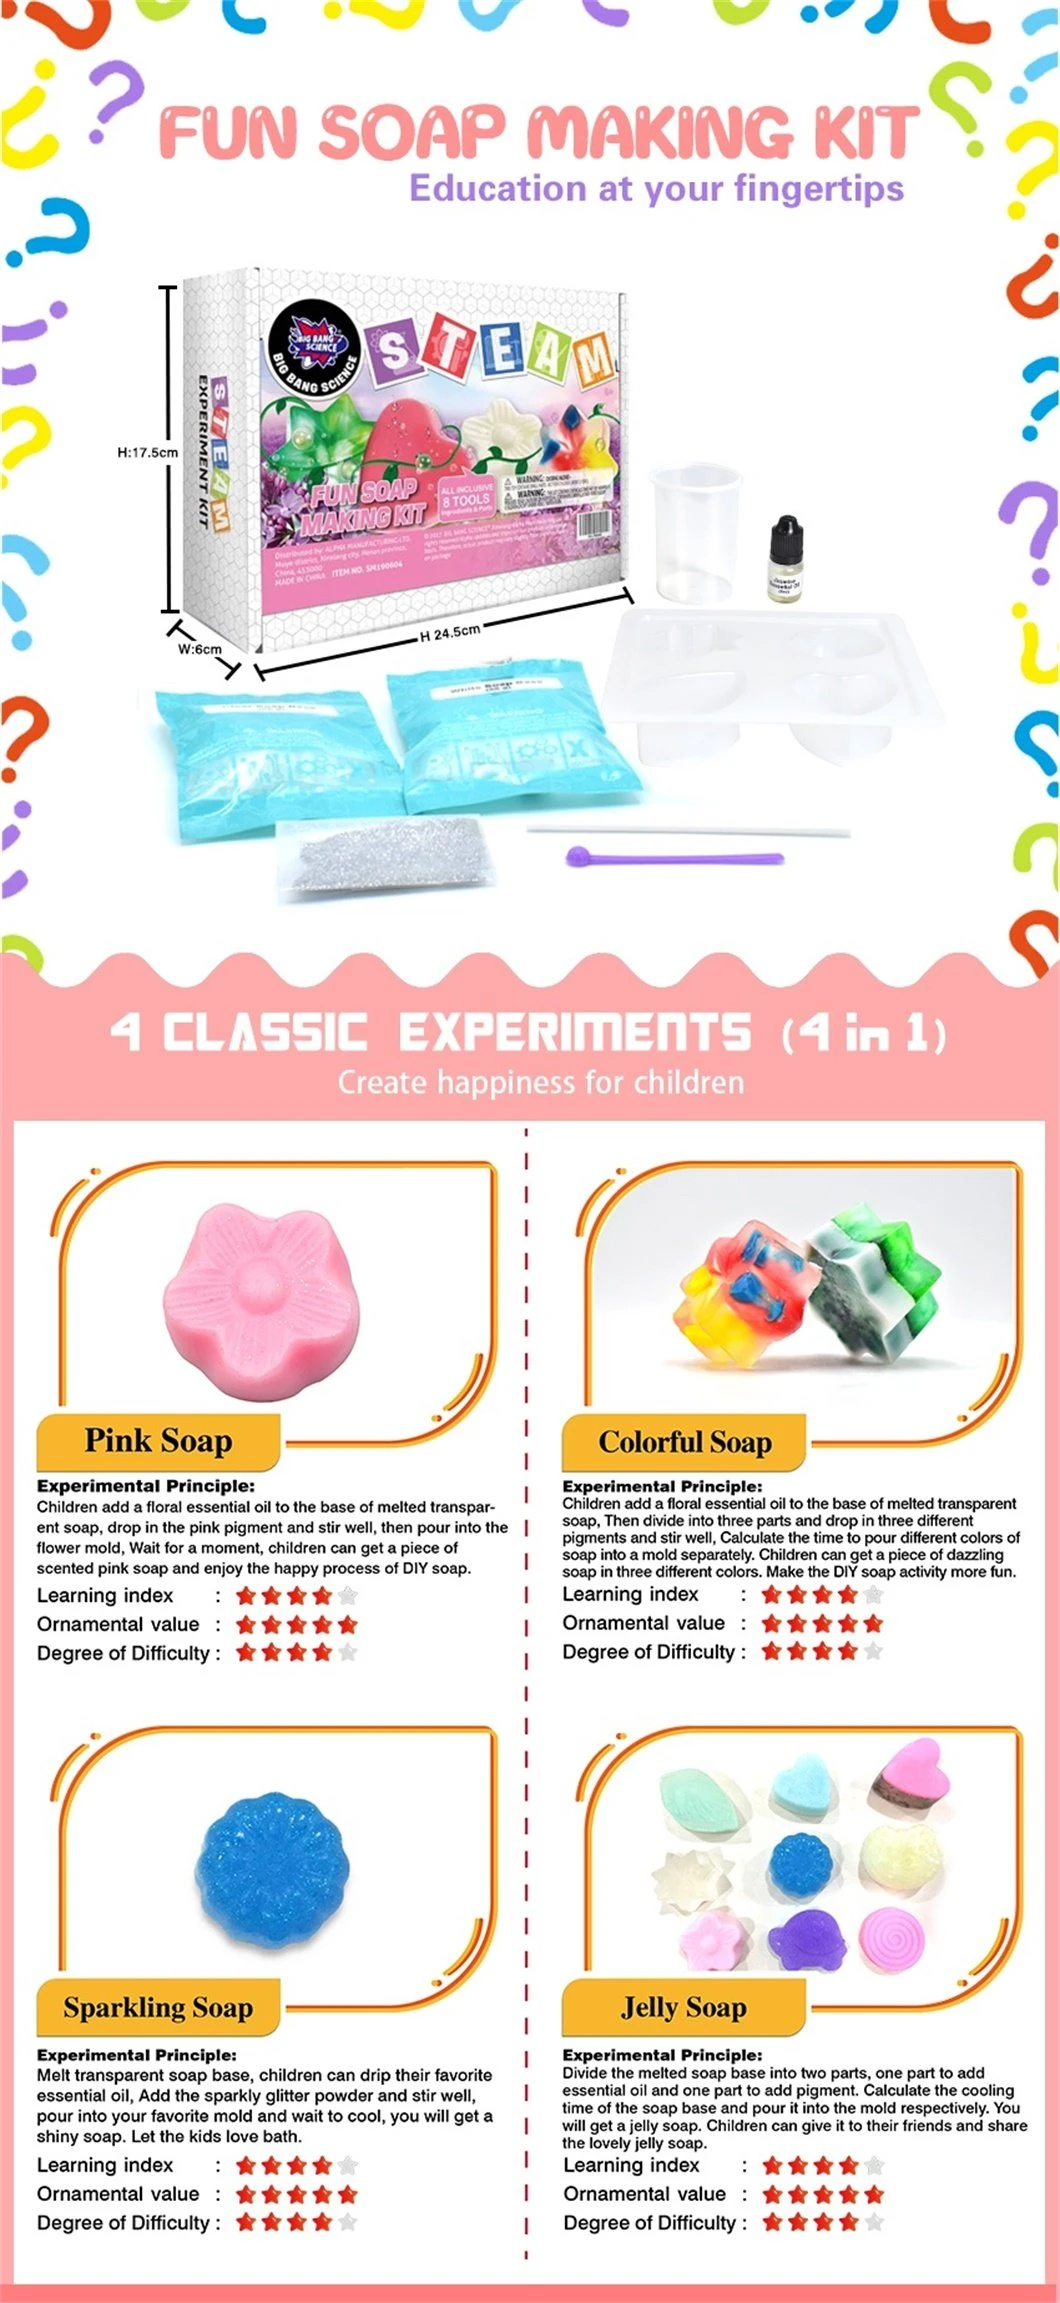 DIY Soap Kit DIY Soap Making Toy Girls Toy for Kids 8+